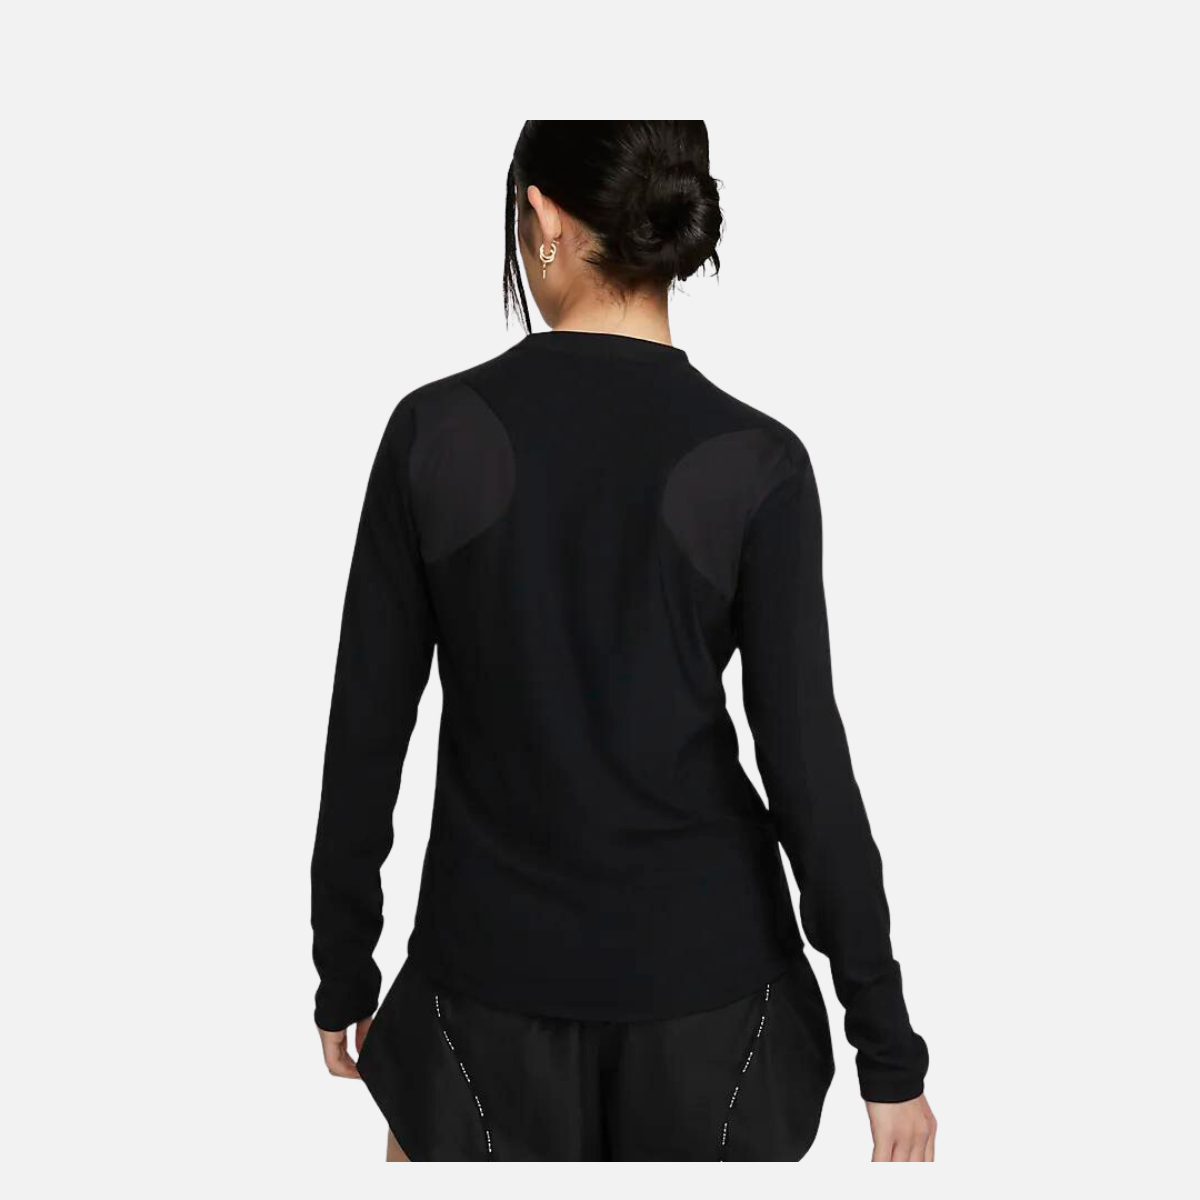 Nike air dry fit Women's Long Sleeve Running Top-Black